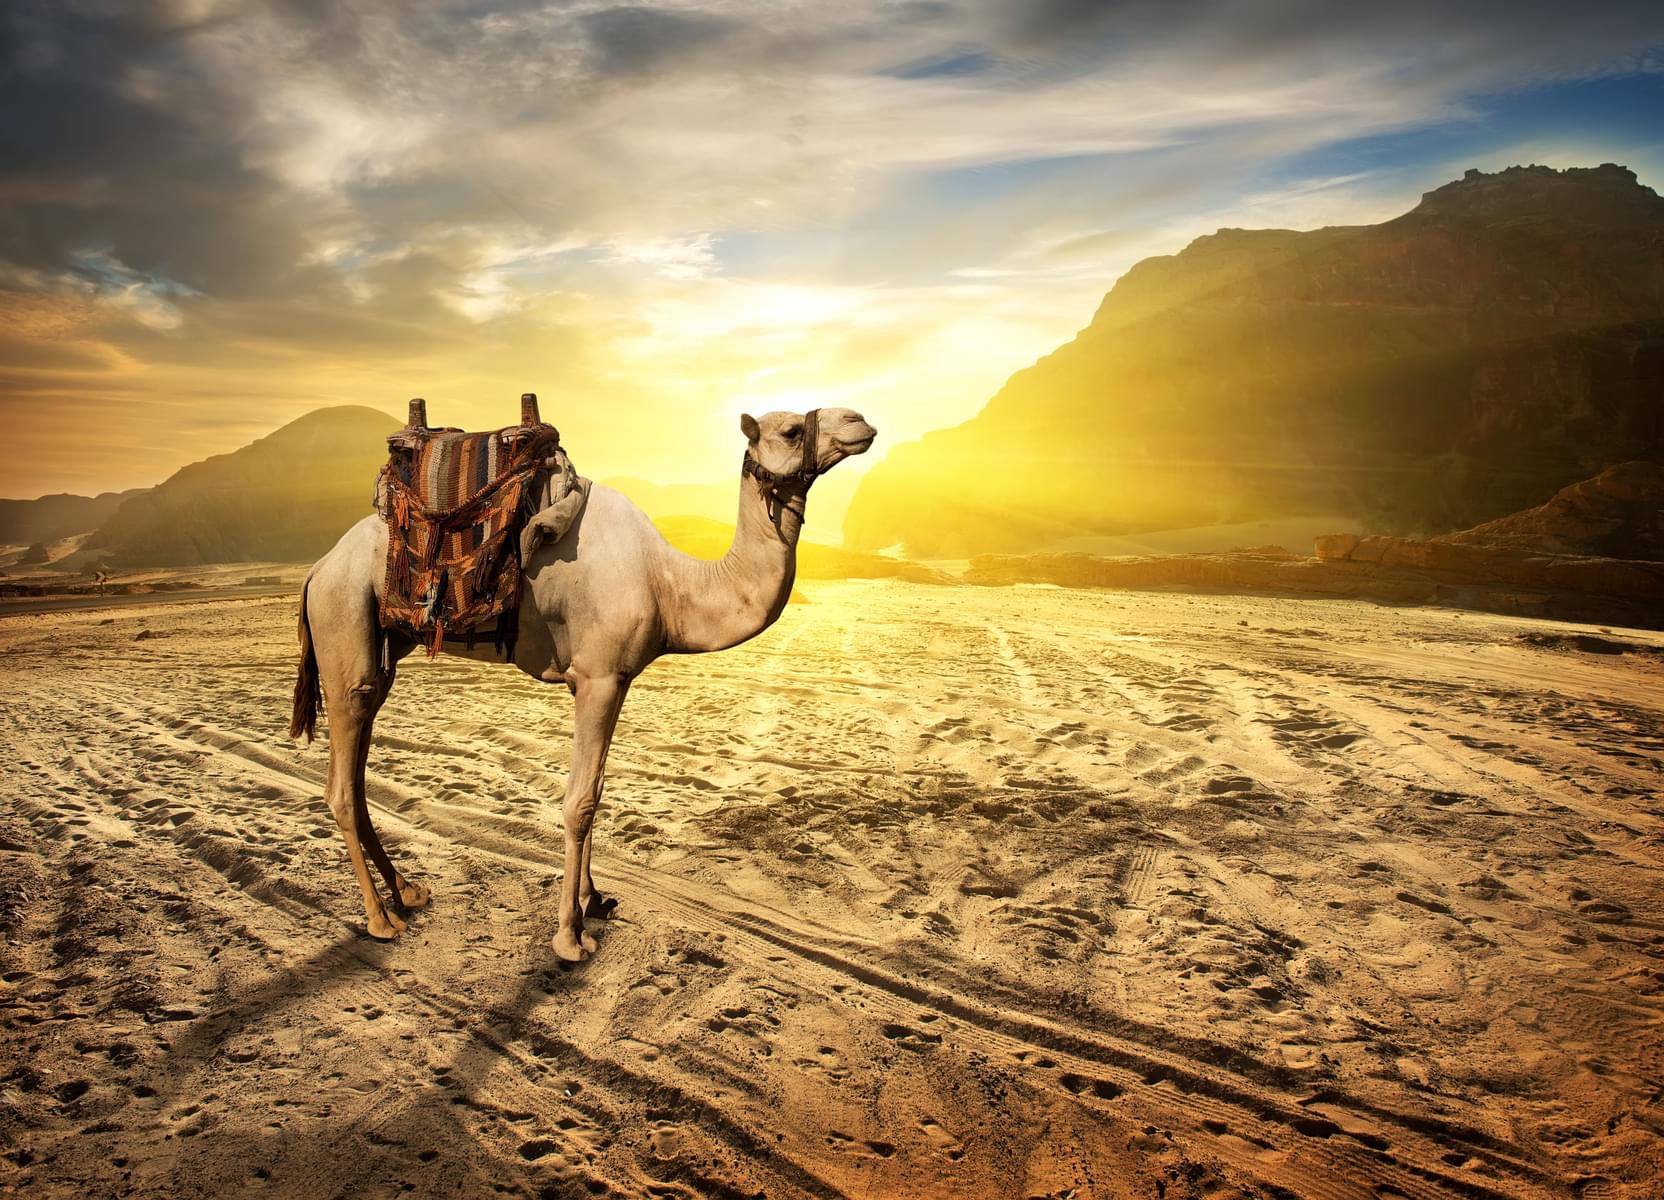 Tips for Desert Safari in Abu Dhabi